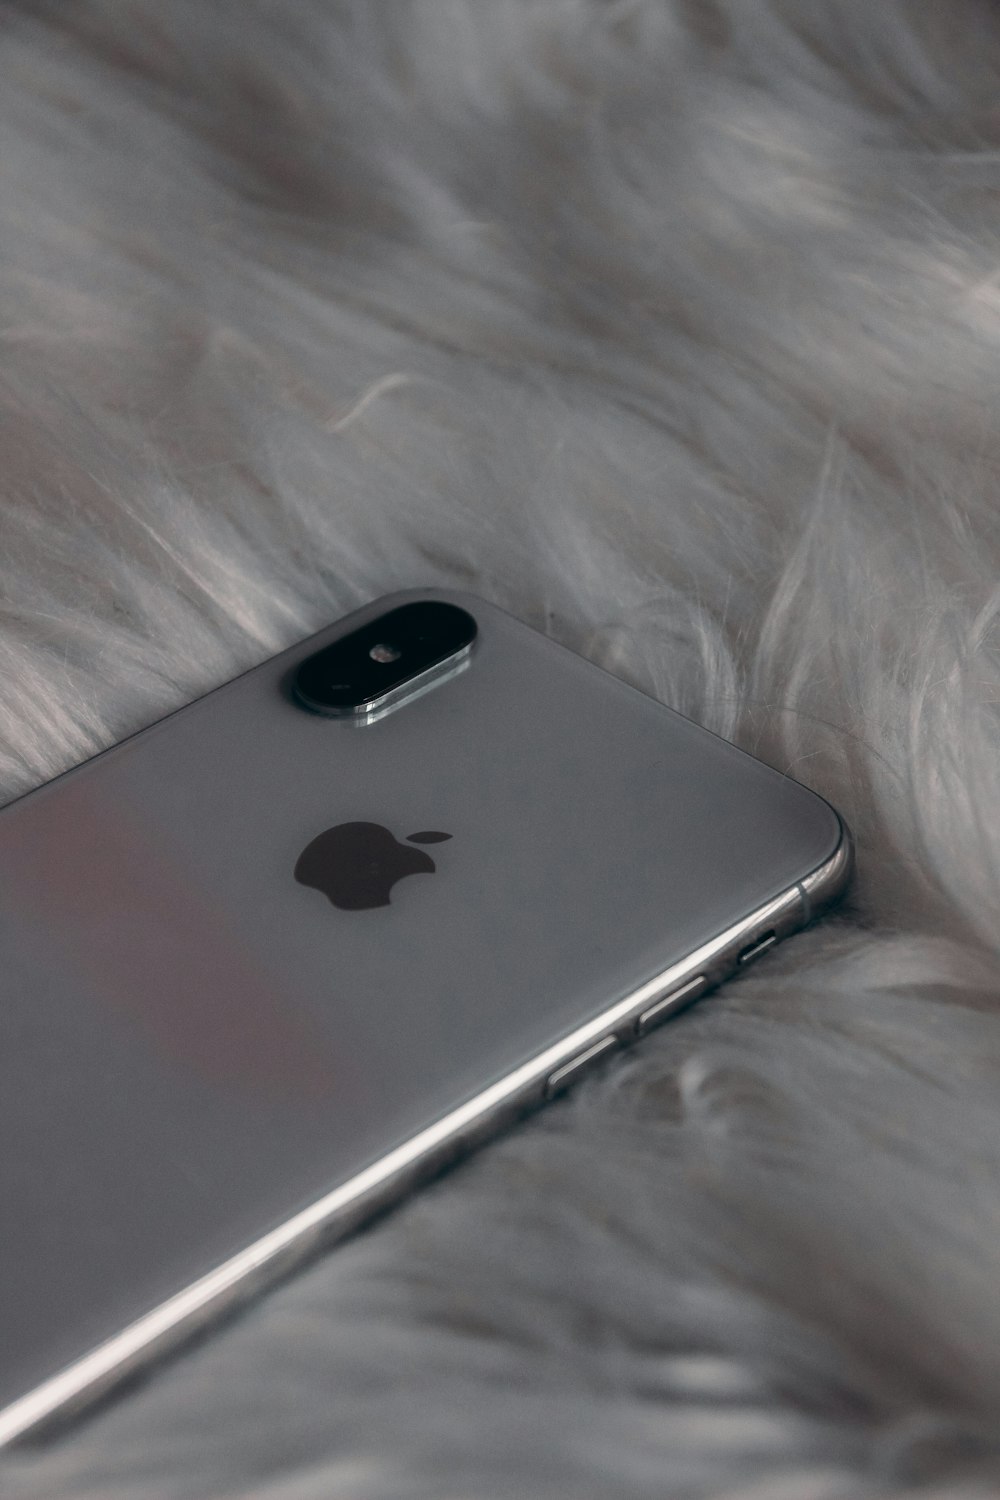 Space Grau iPhone 6 auf weißem Textil